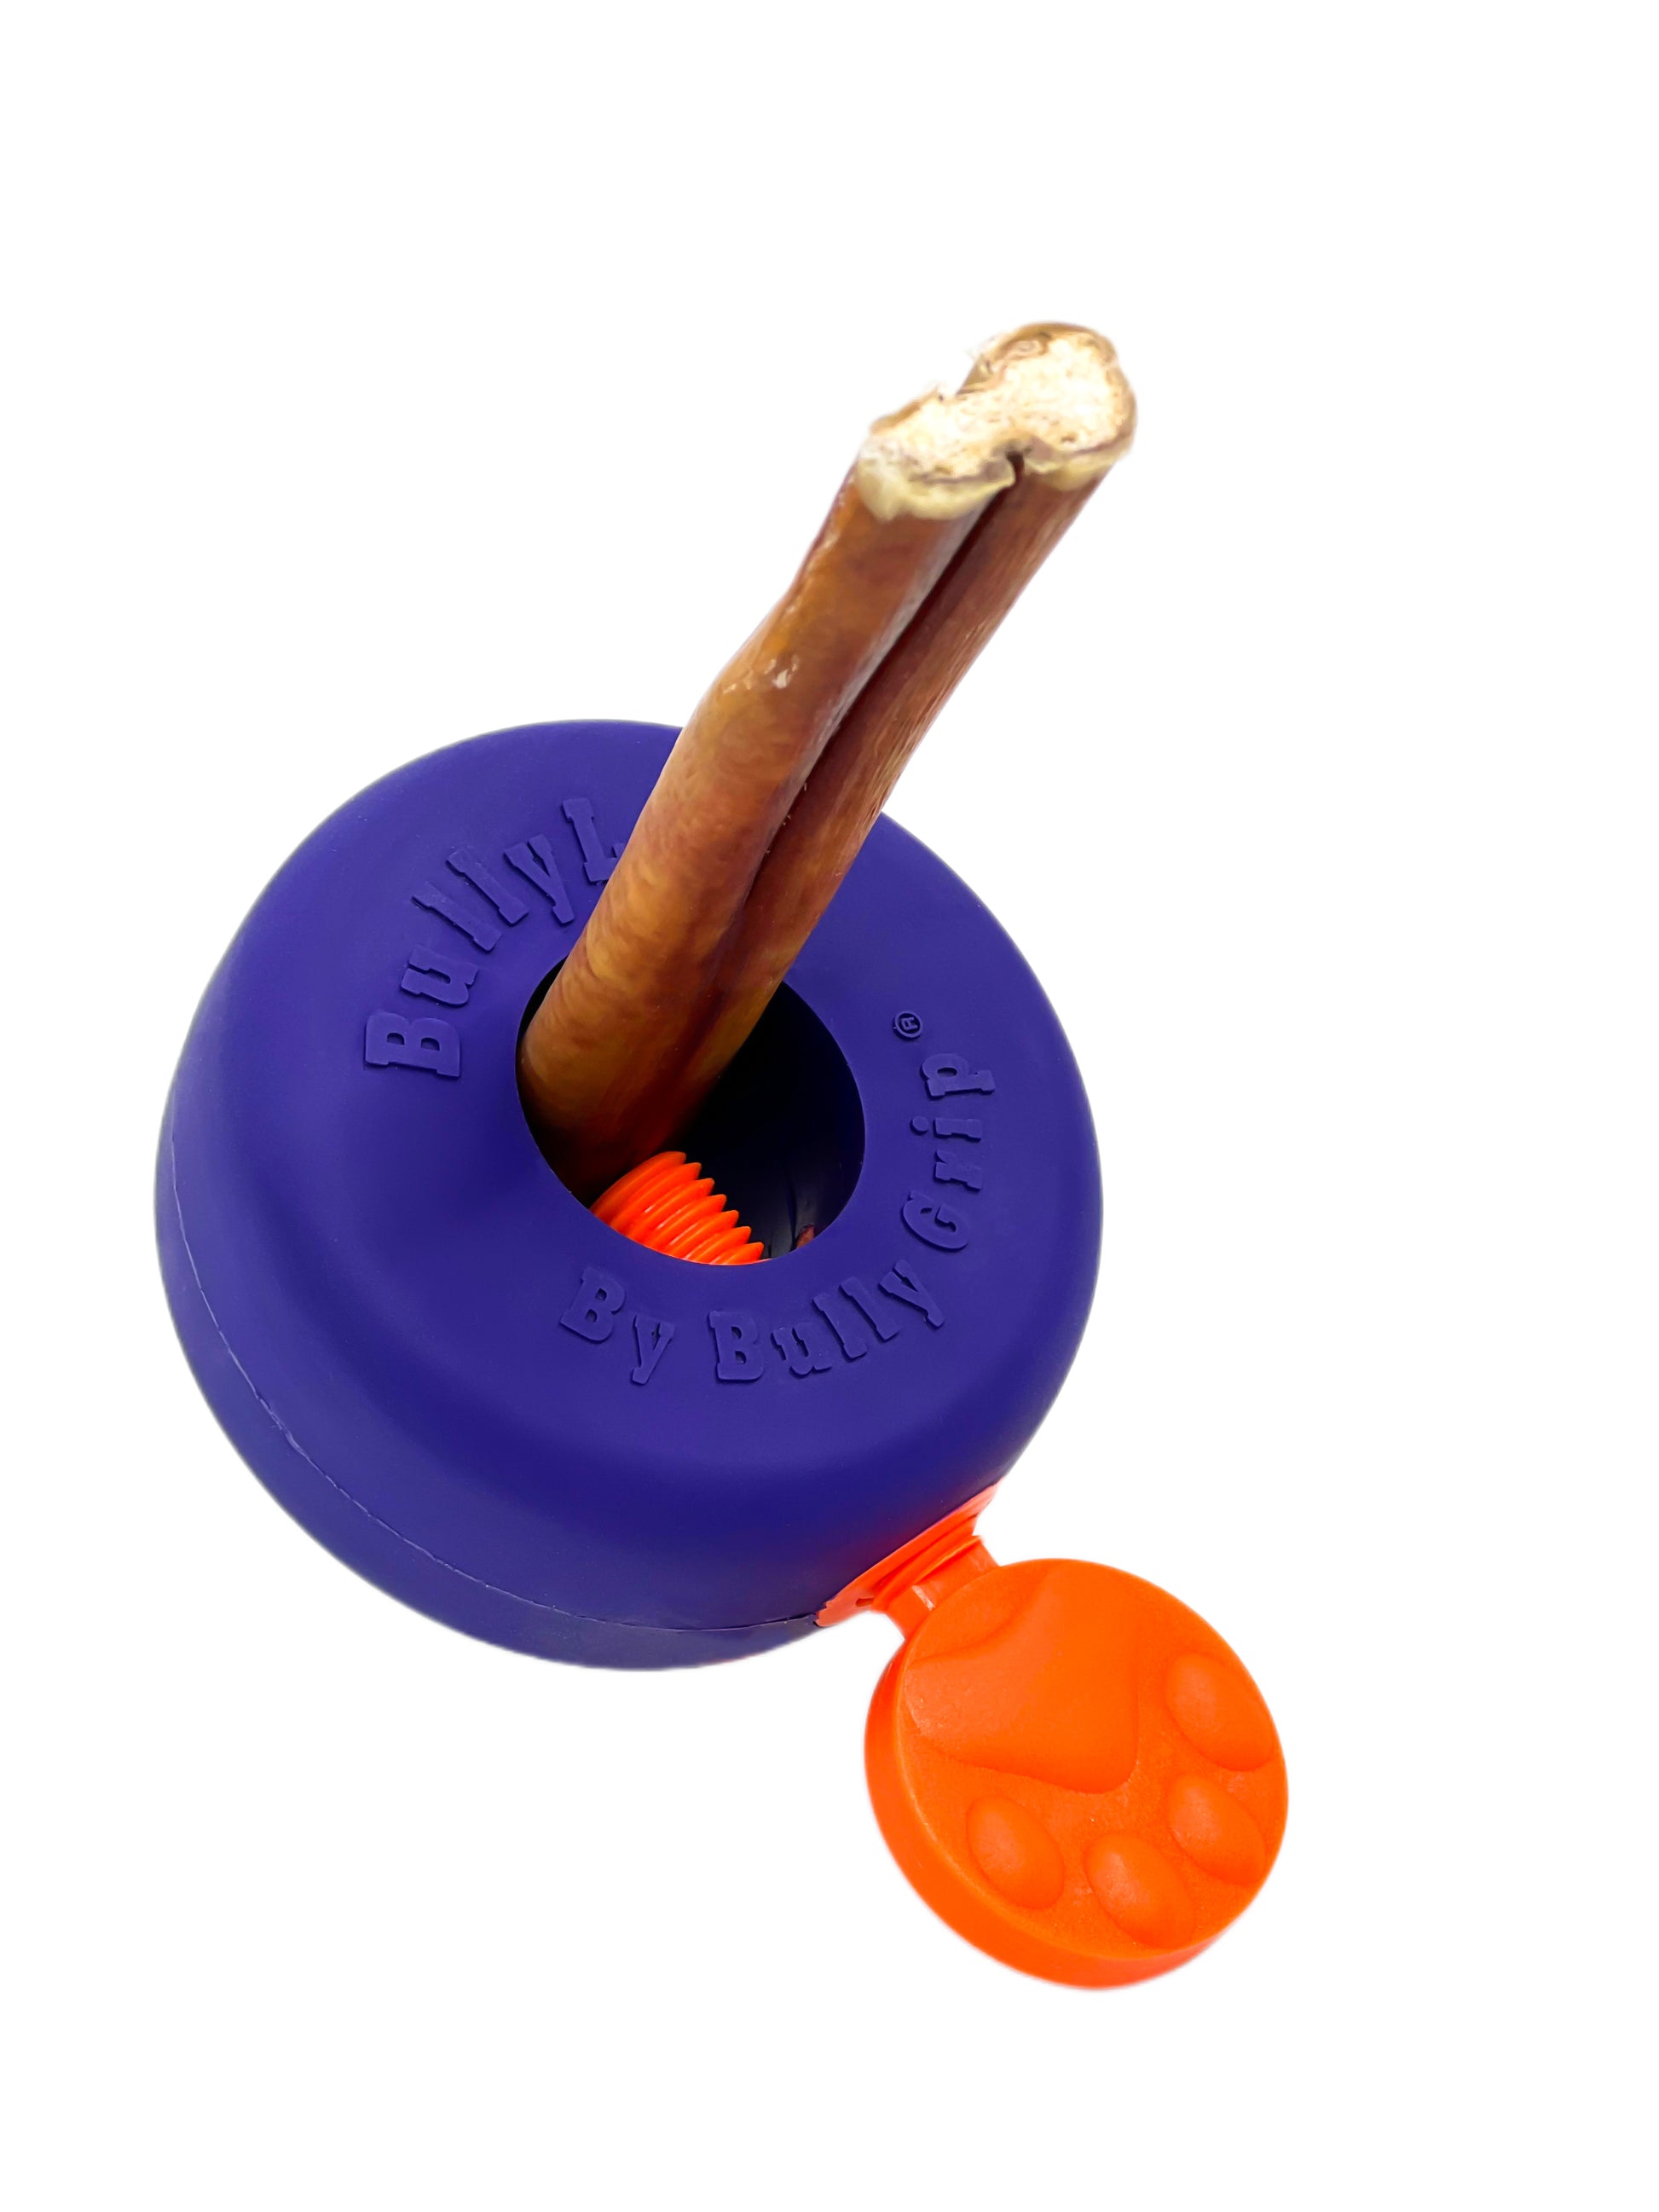 Bully Lok - Bully stick & chew treat holder